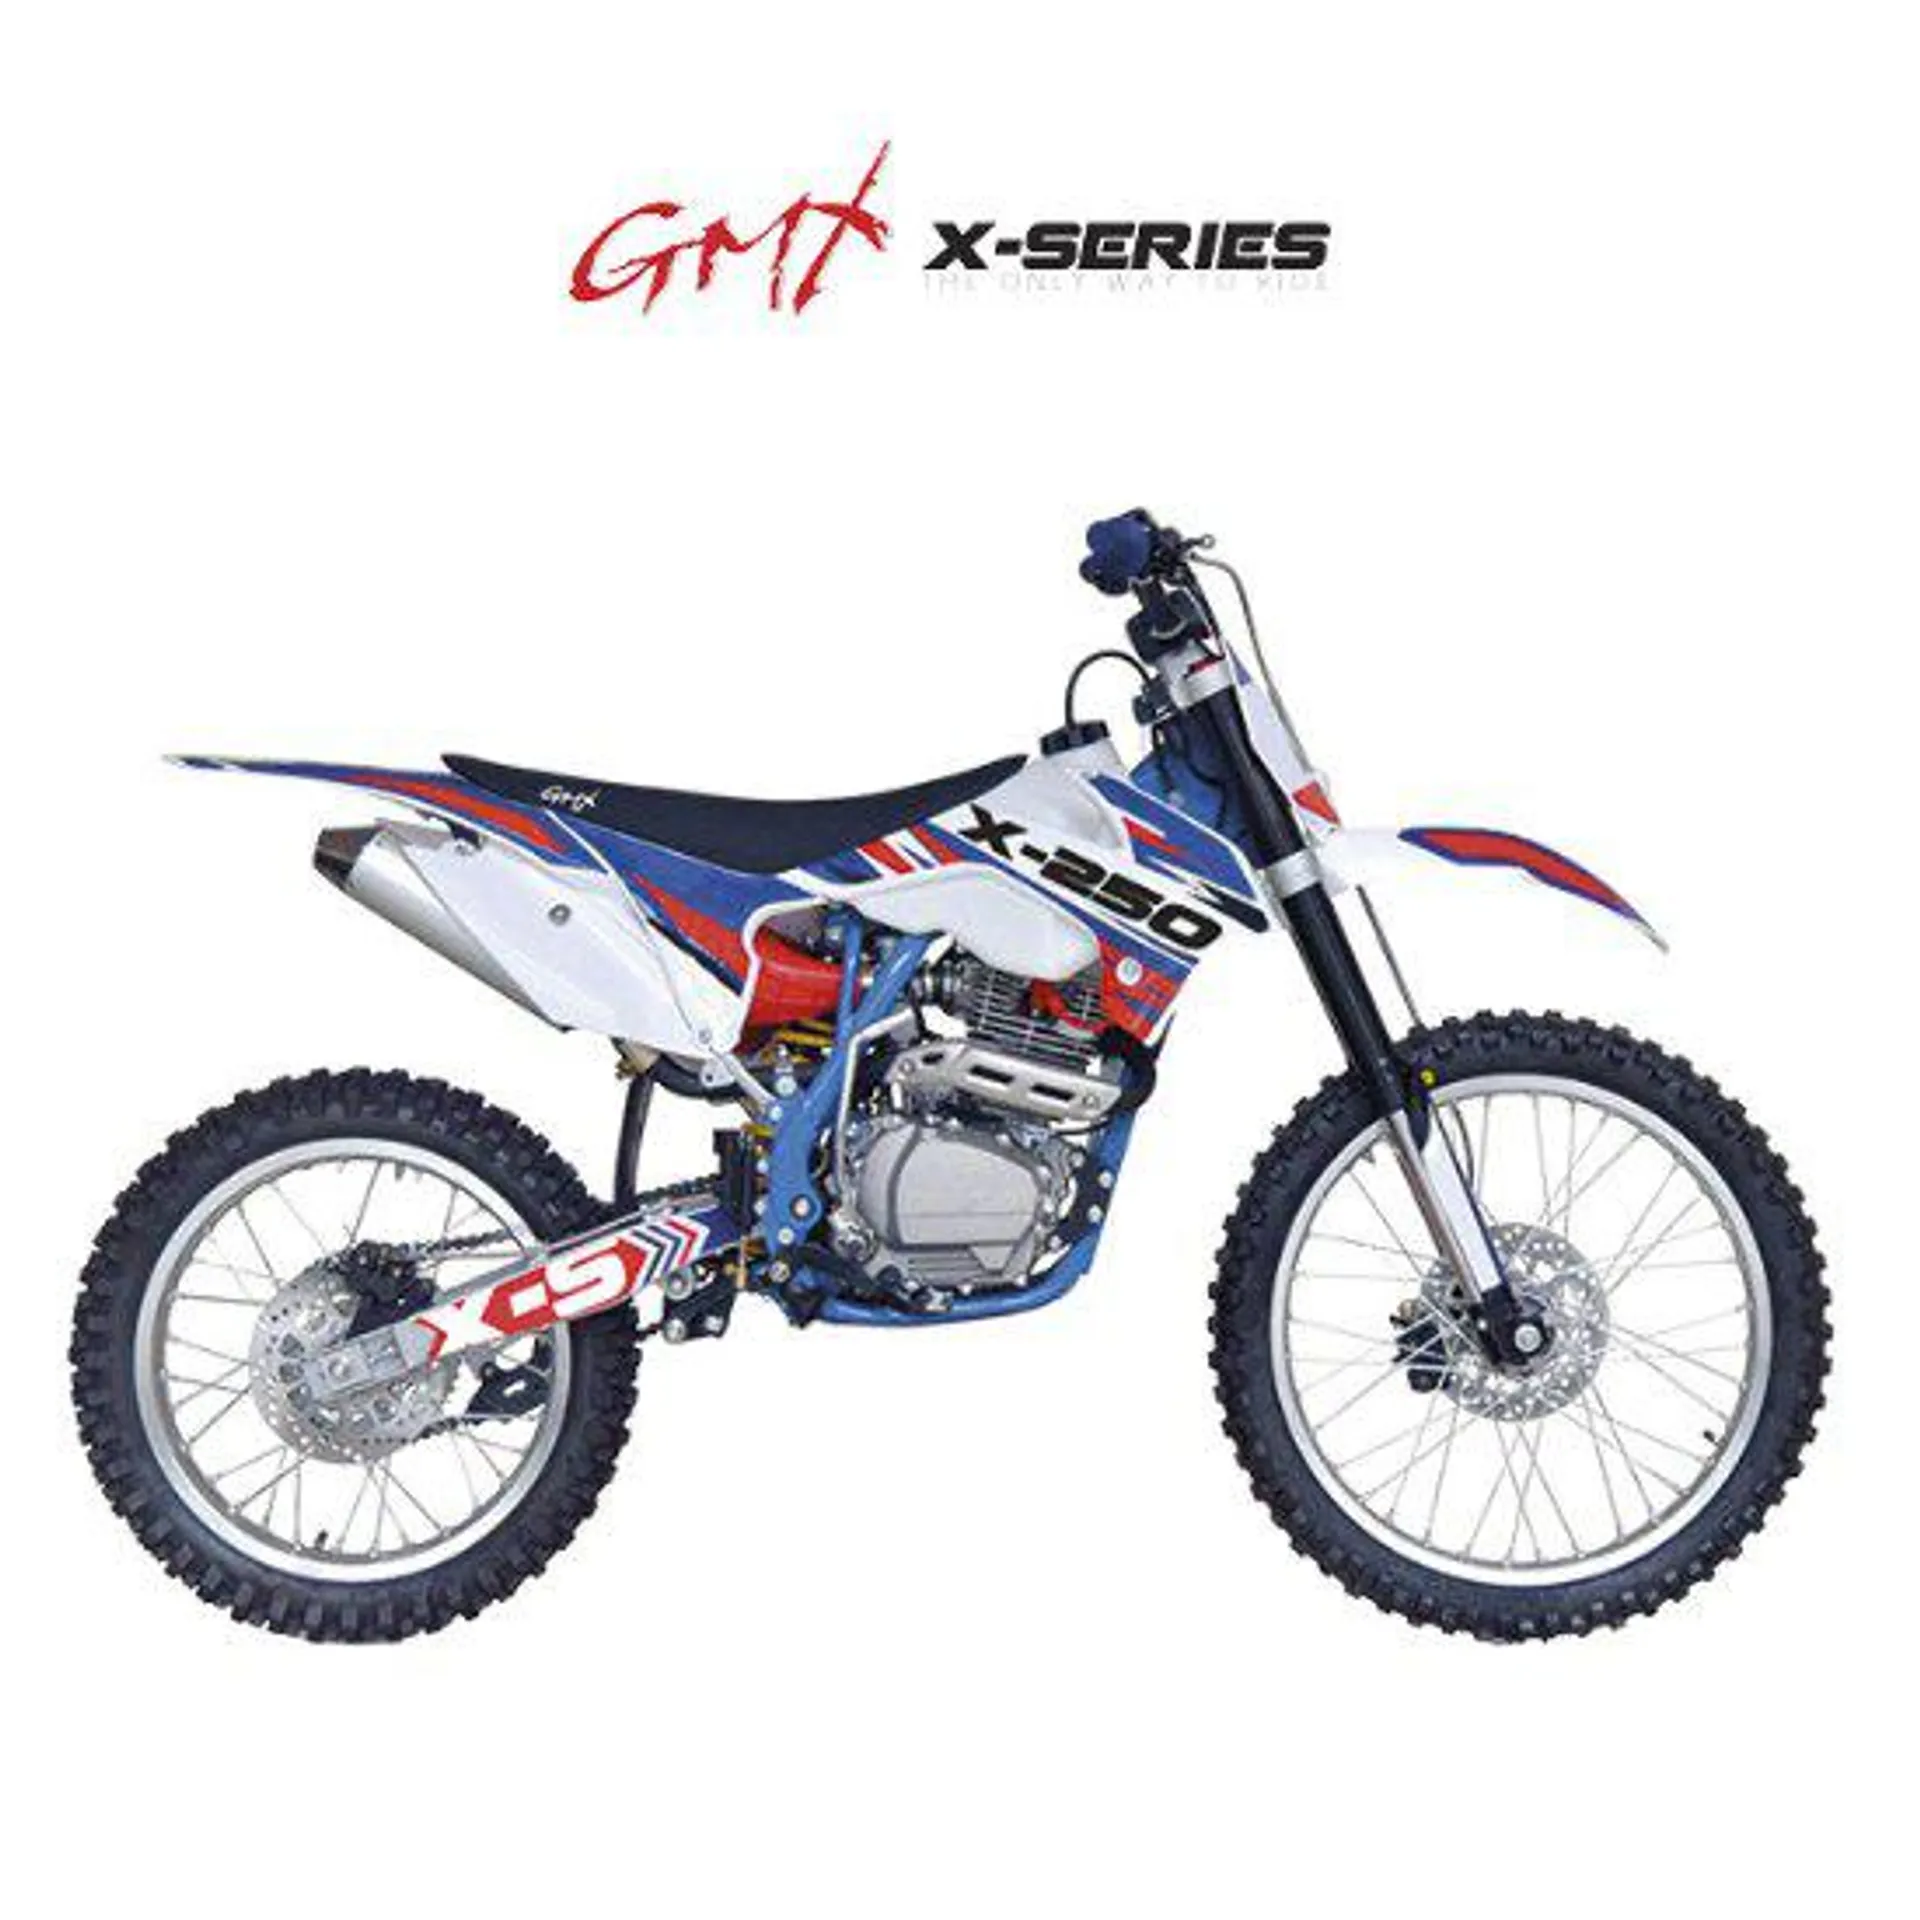 GMX X-Series X-250 Dirt Bike- Blue/Red